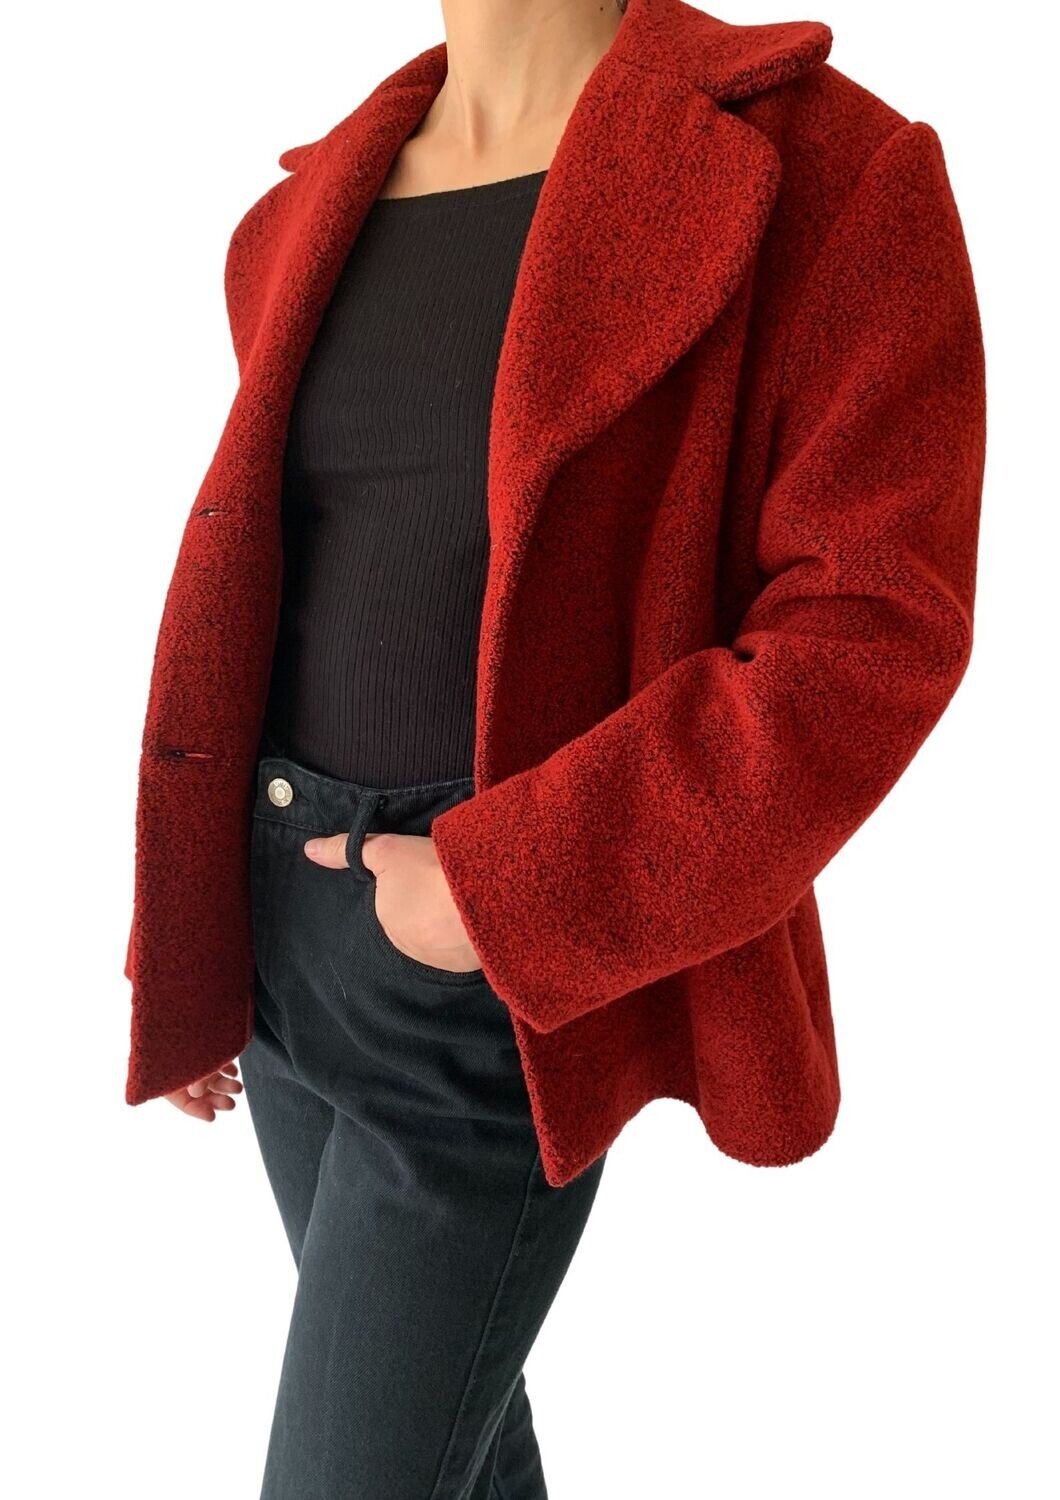 Crveni blejzer/jaknica